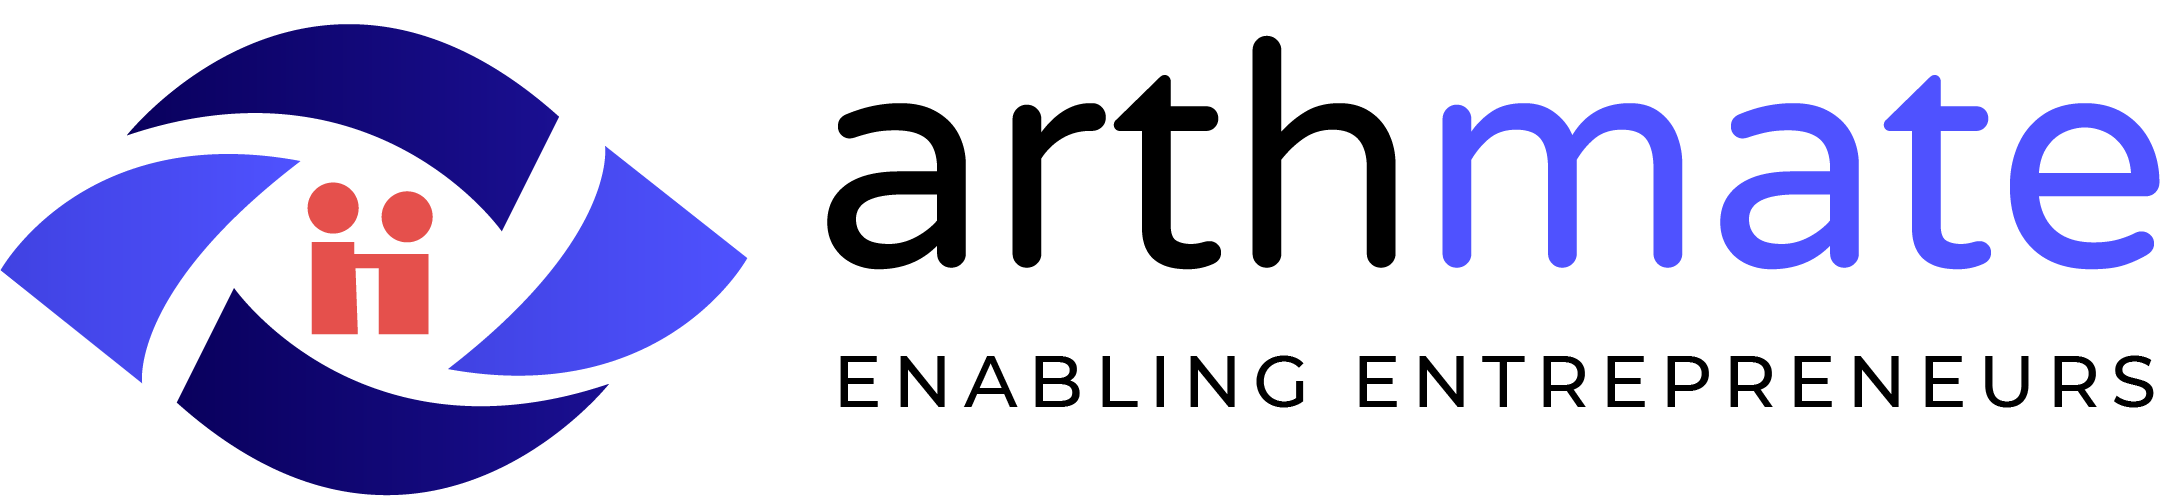 arthmate logo